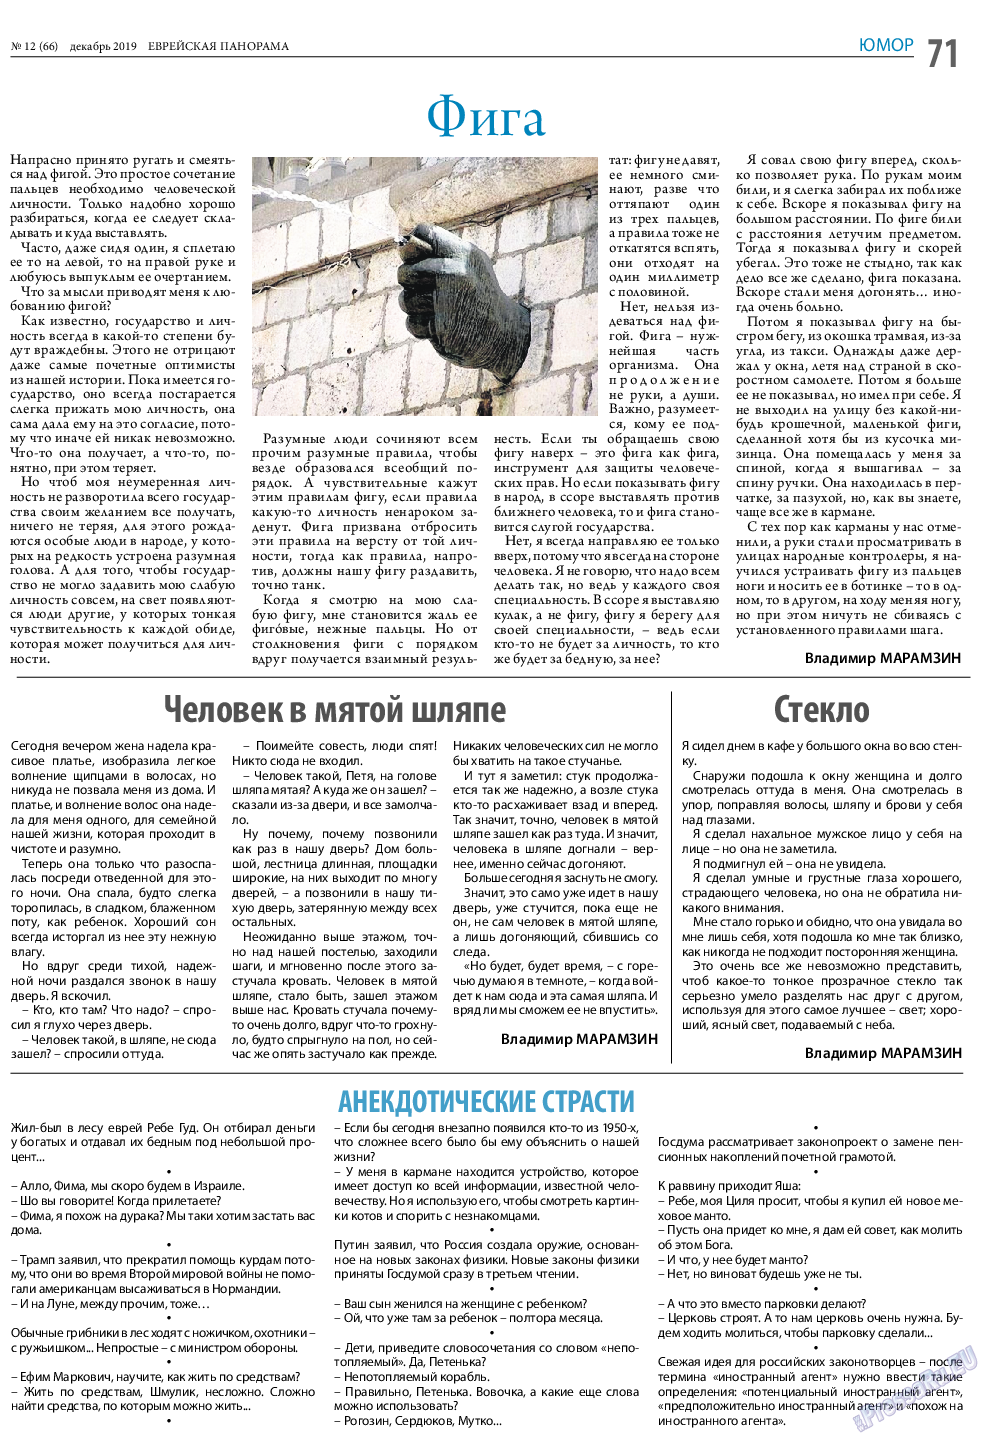 Еврейская панорама, газета. 2019 №12 стр.71